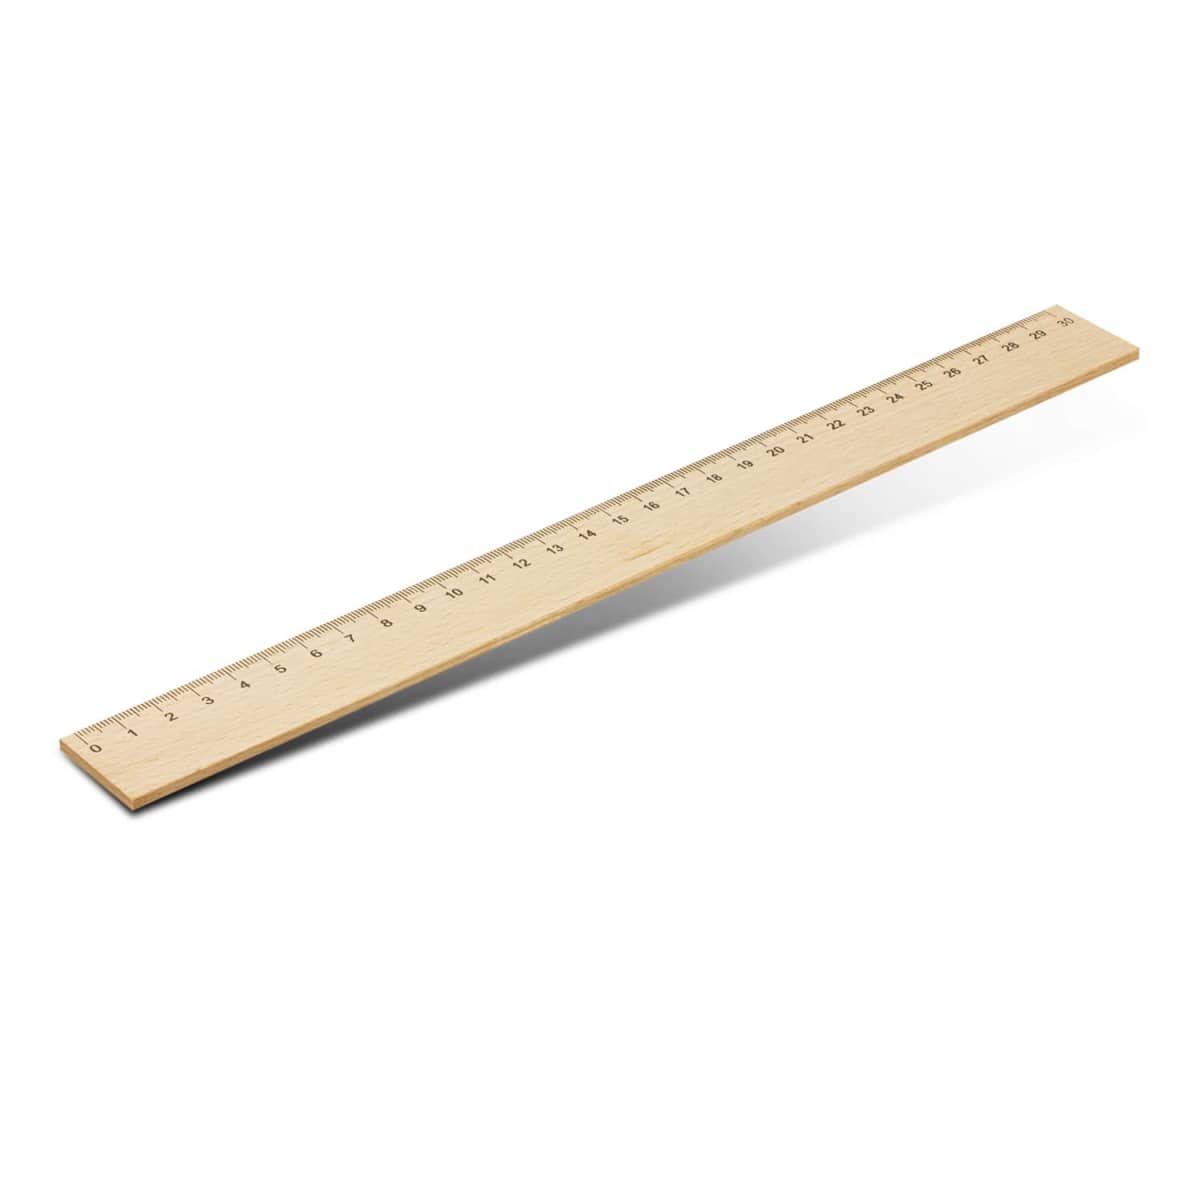 Wooden 30cm Ruler